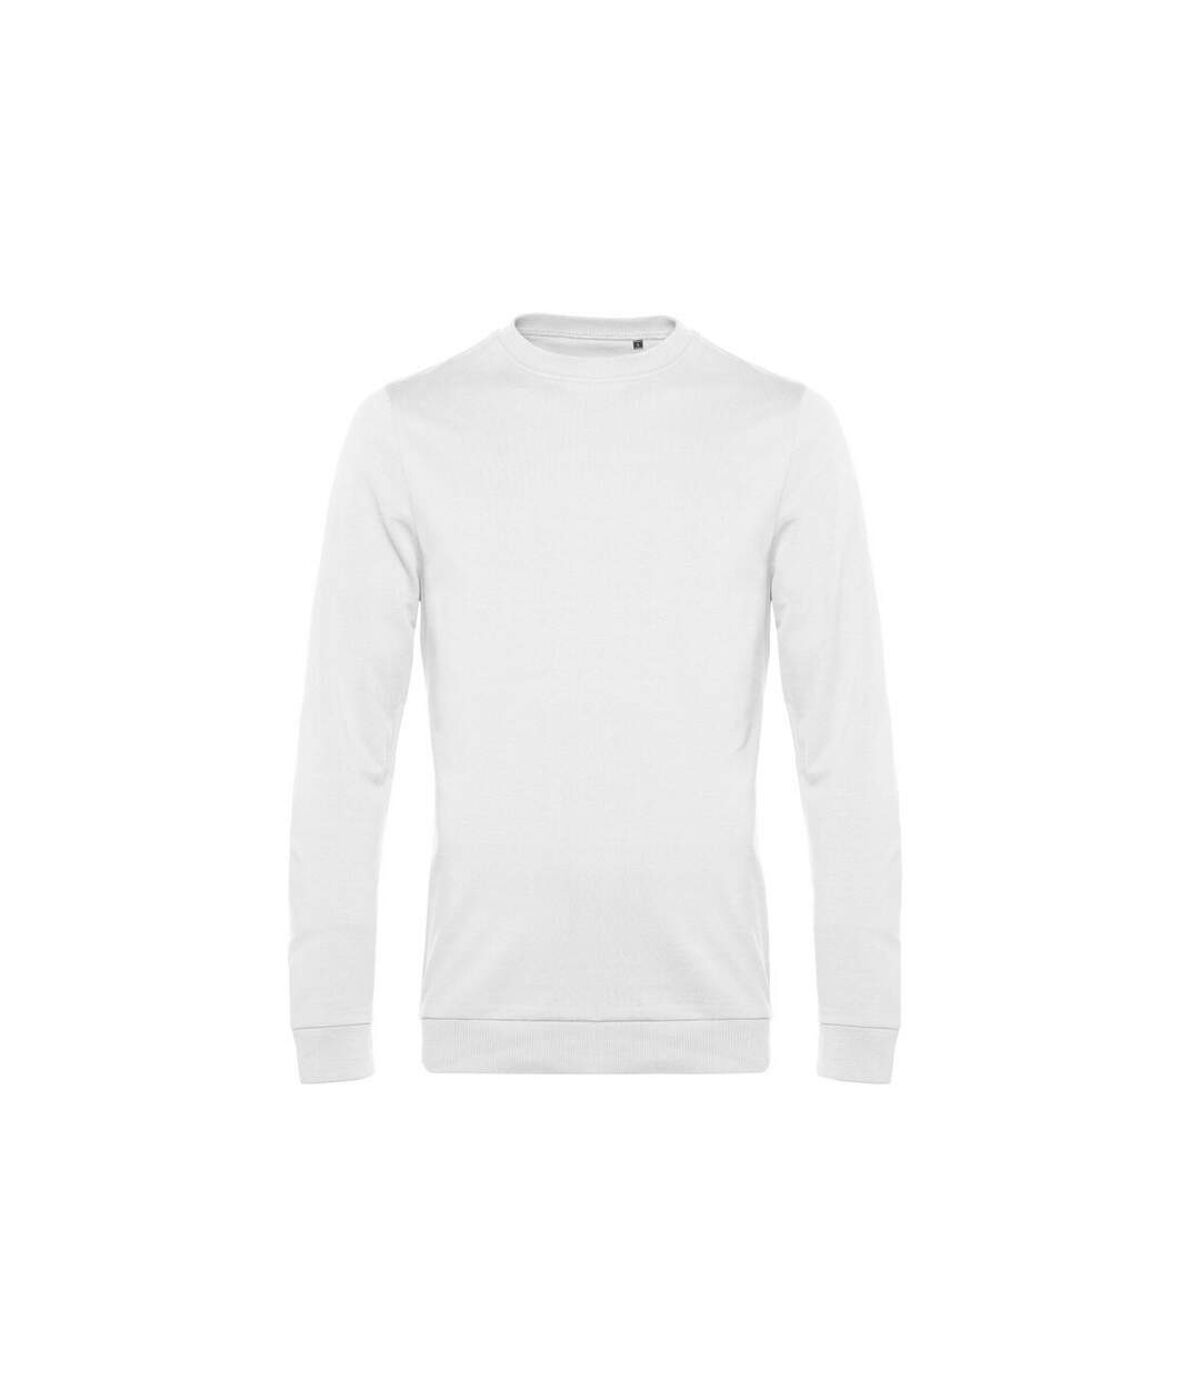 B&C Mens Set In Sweatshirt (White) - UTBC4680